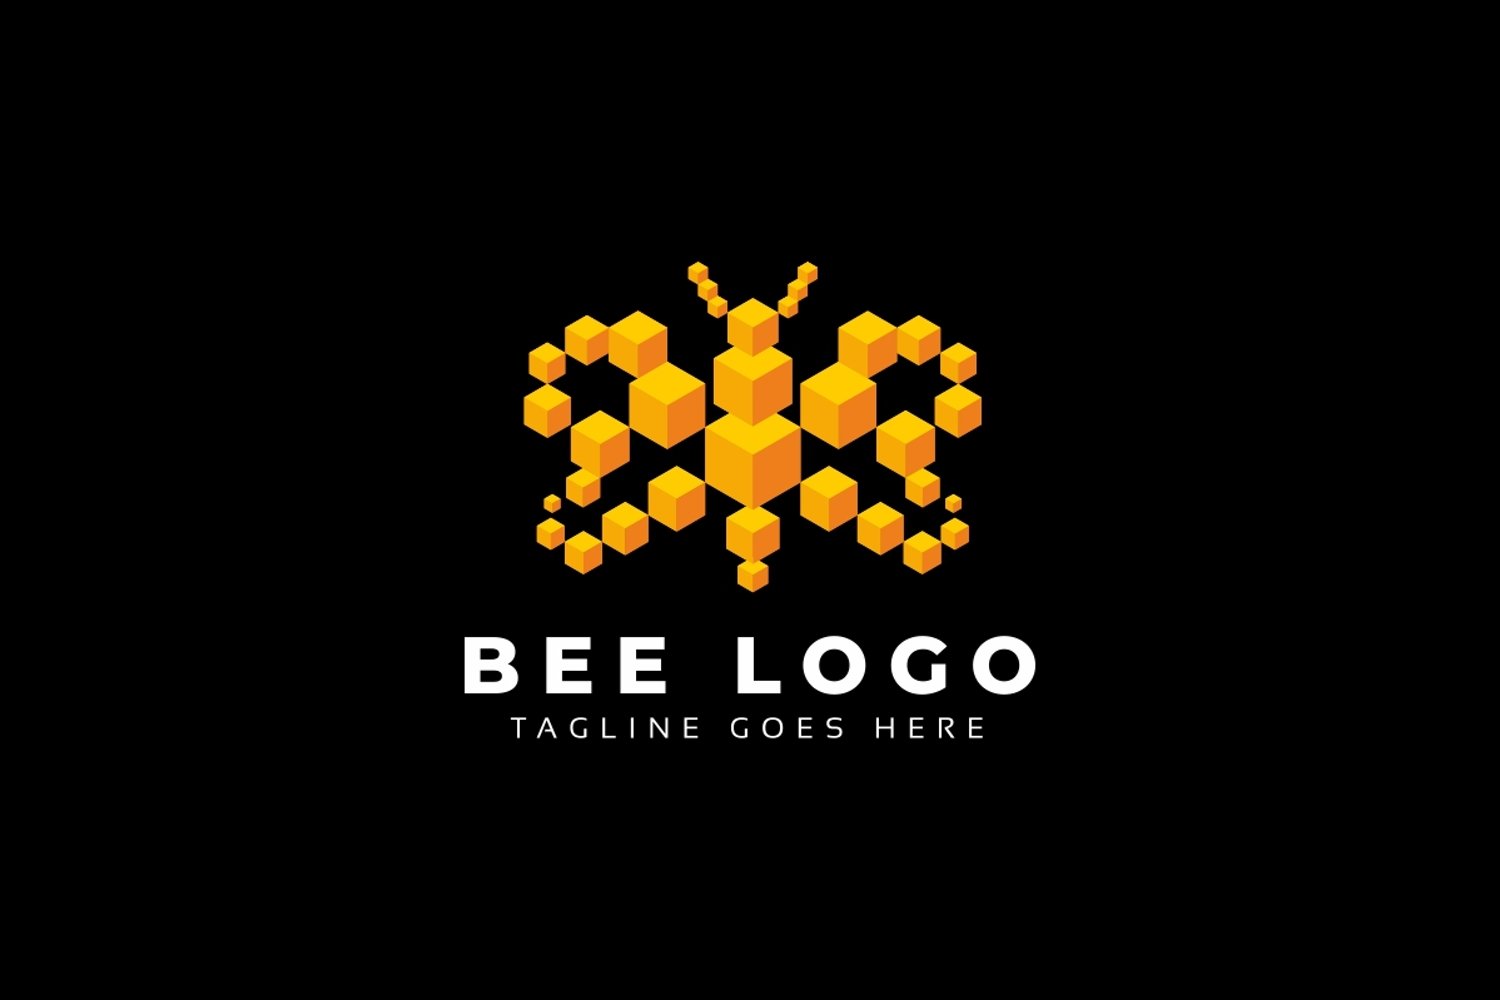 Bee logo design on the black background.